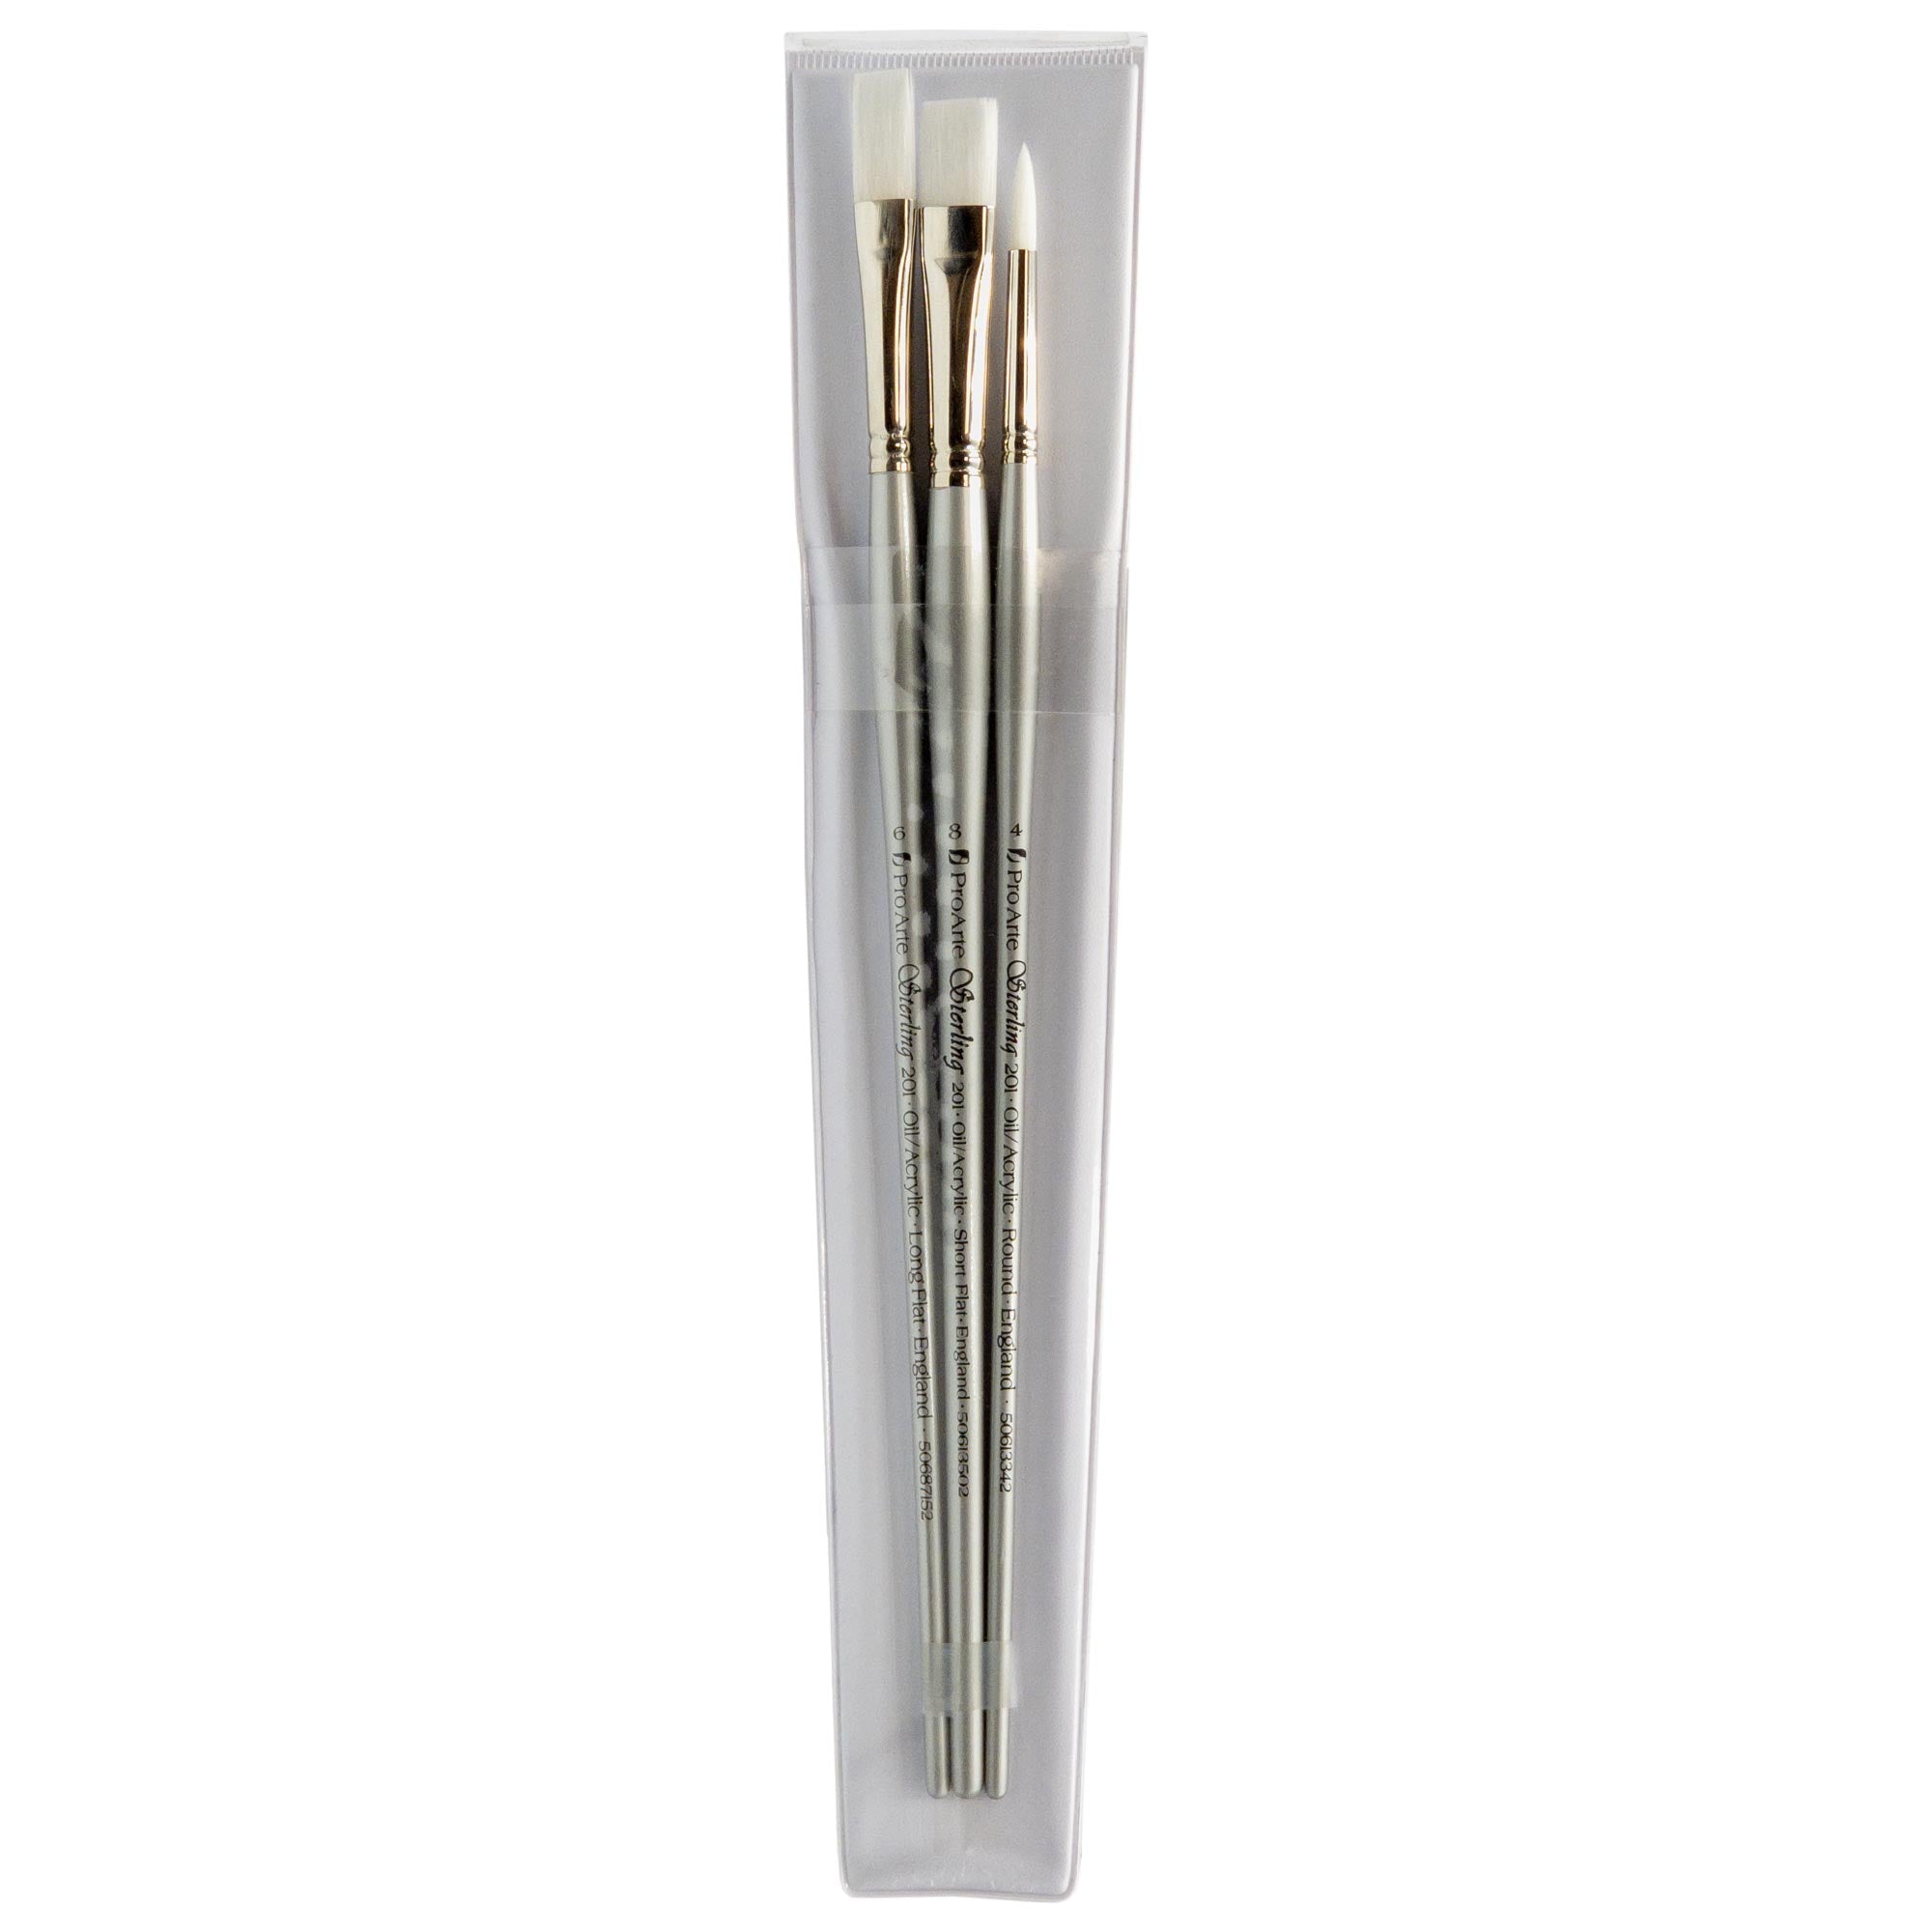 Pro Arte Sterling Acrylic Brushes - W6 - Set of 3